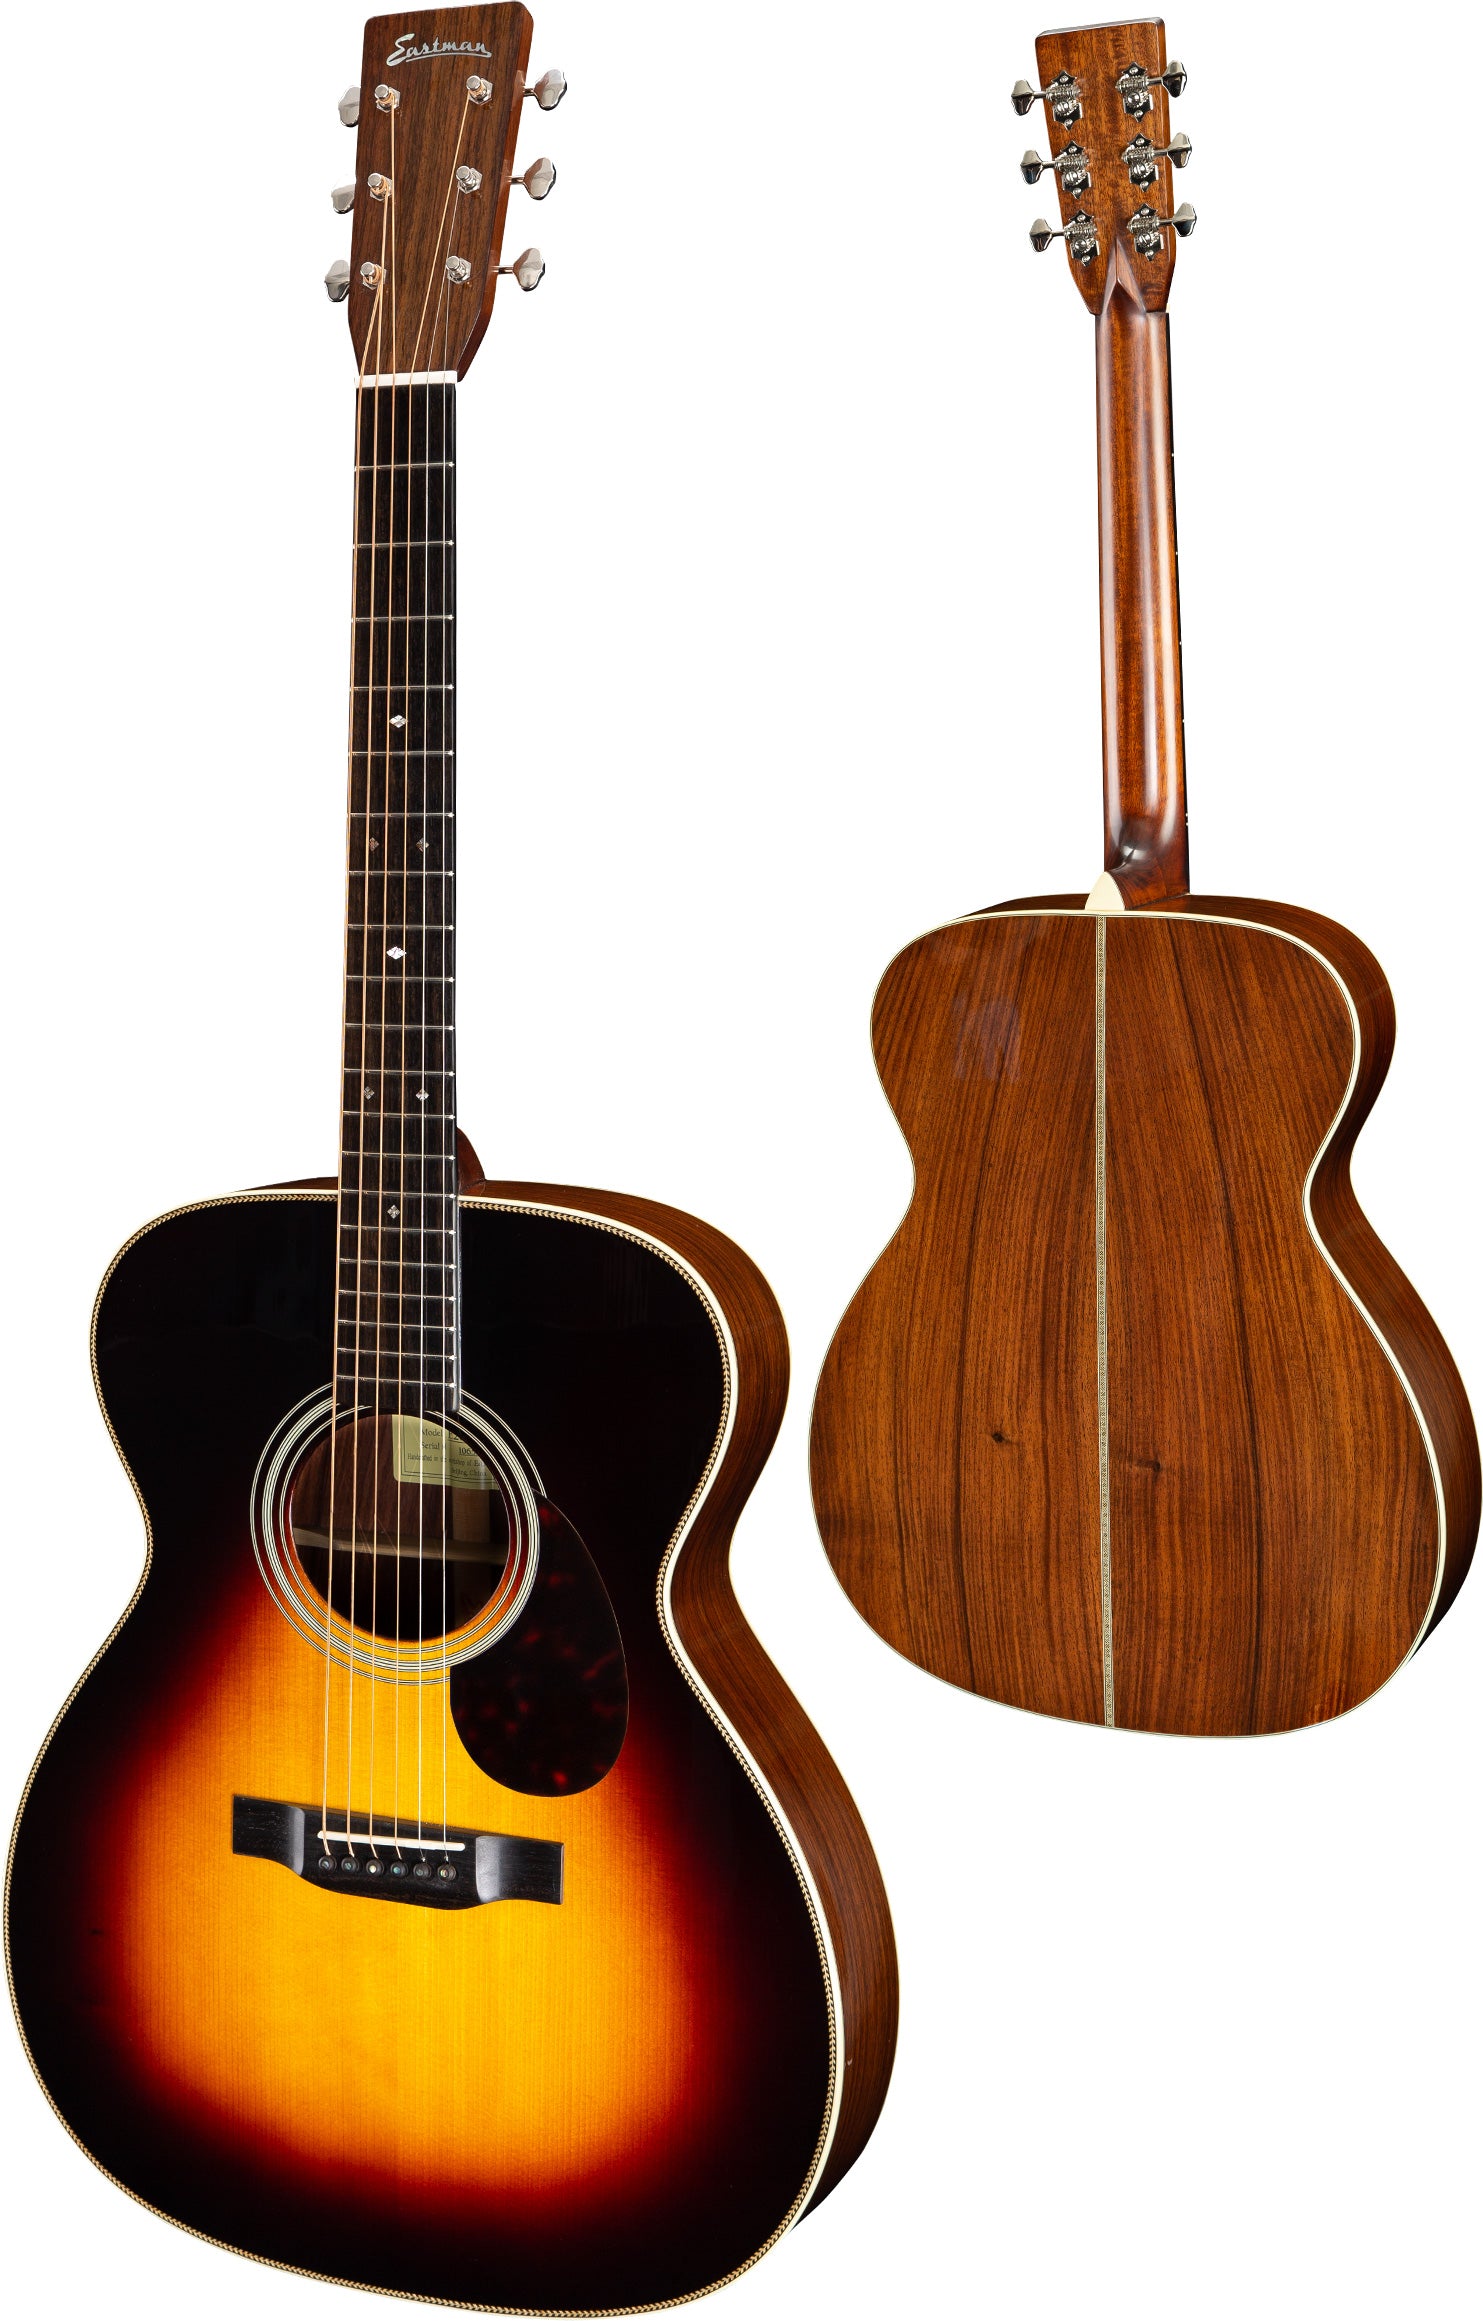 Eastman E20OM-TC-SB Orchestra model, Acoustic Guitar for sale at Richards Guitars.